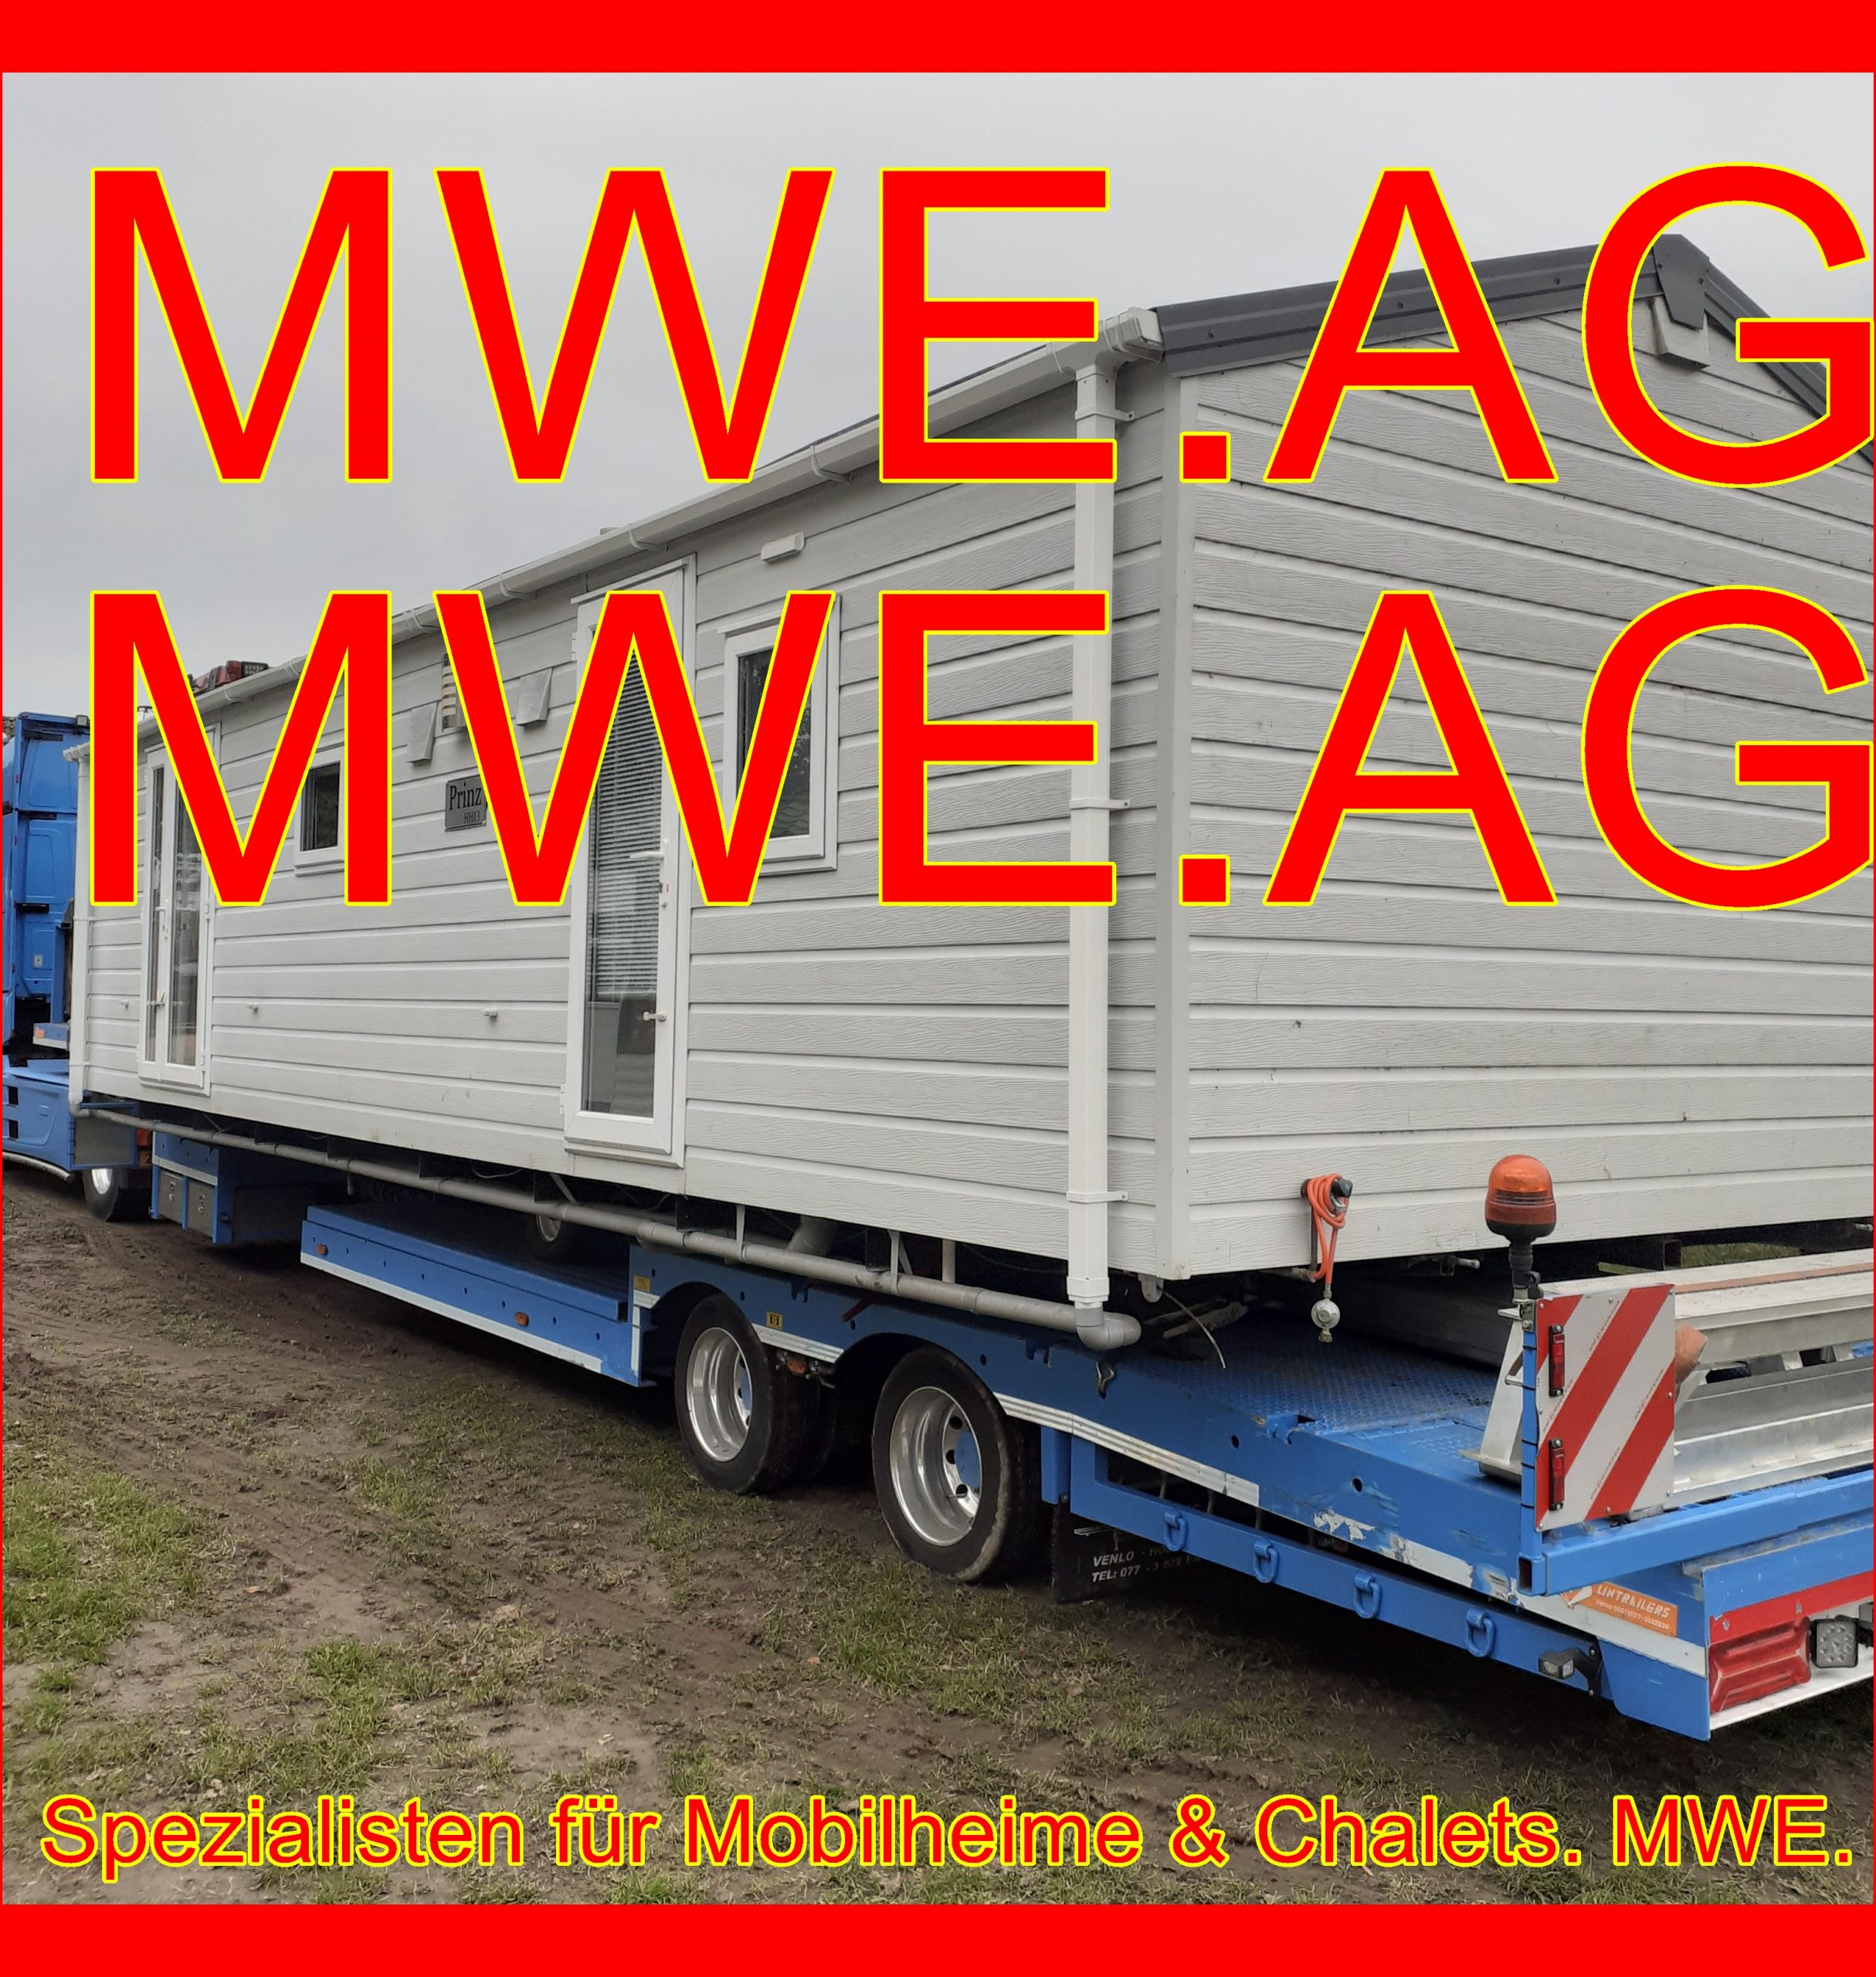 MWE.AG Domain gesichert durch Marcus Wenzel | MWE.